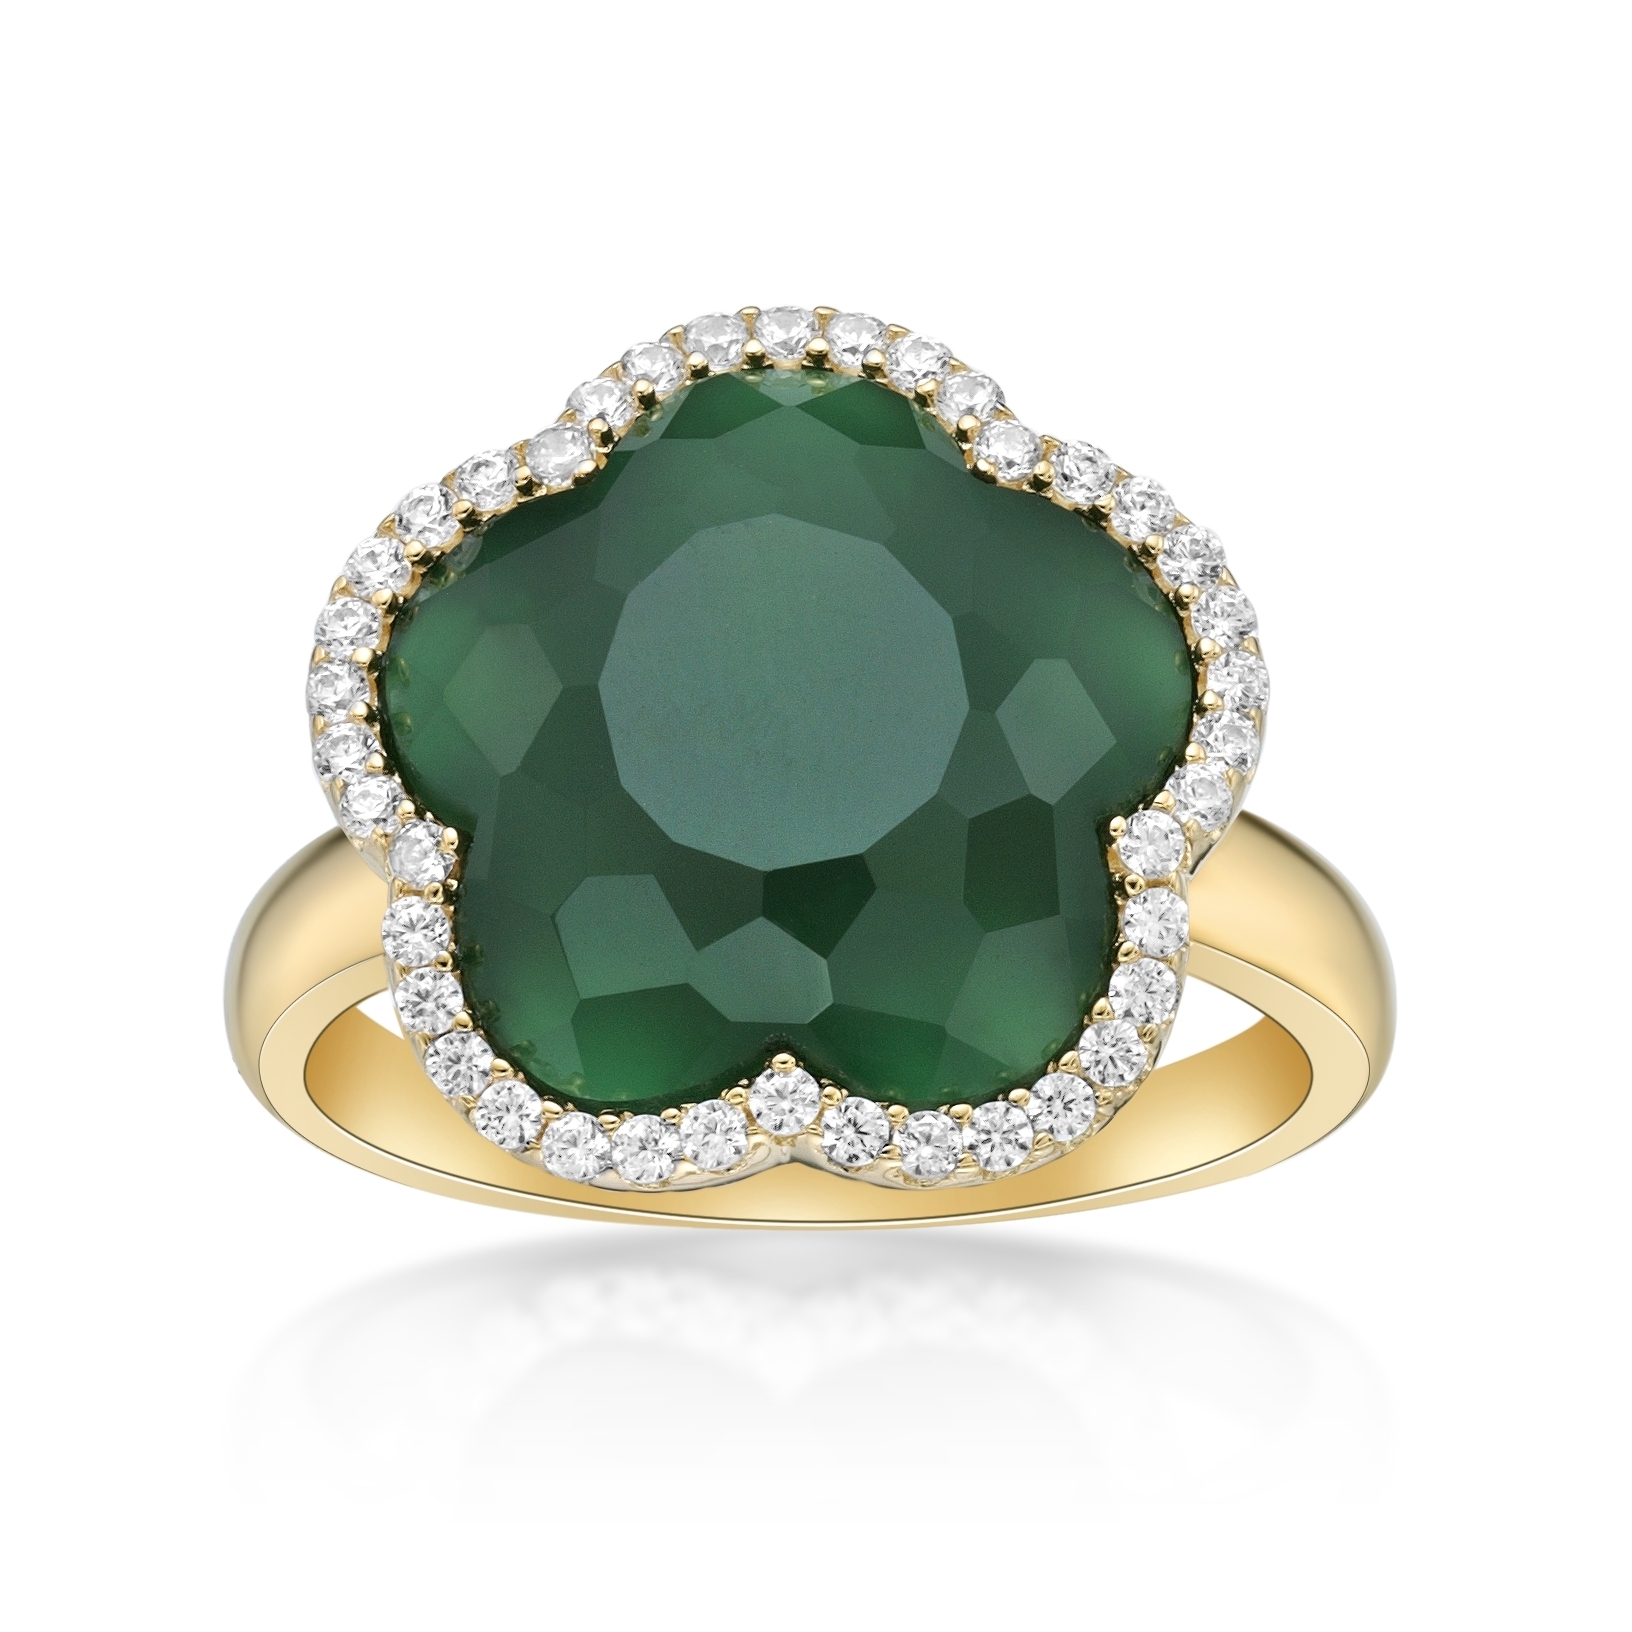 Lavari Jewelers Women’s Green Onyx Five Petal Flower Ring, 925 Sterling Silver, Size 8